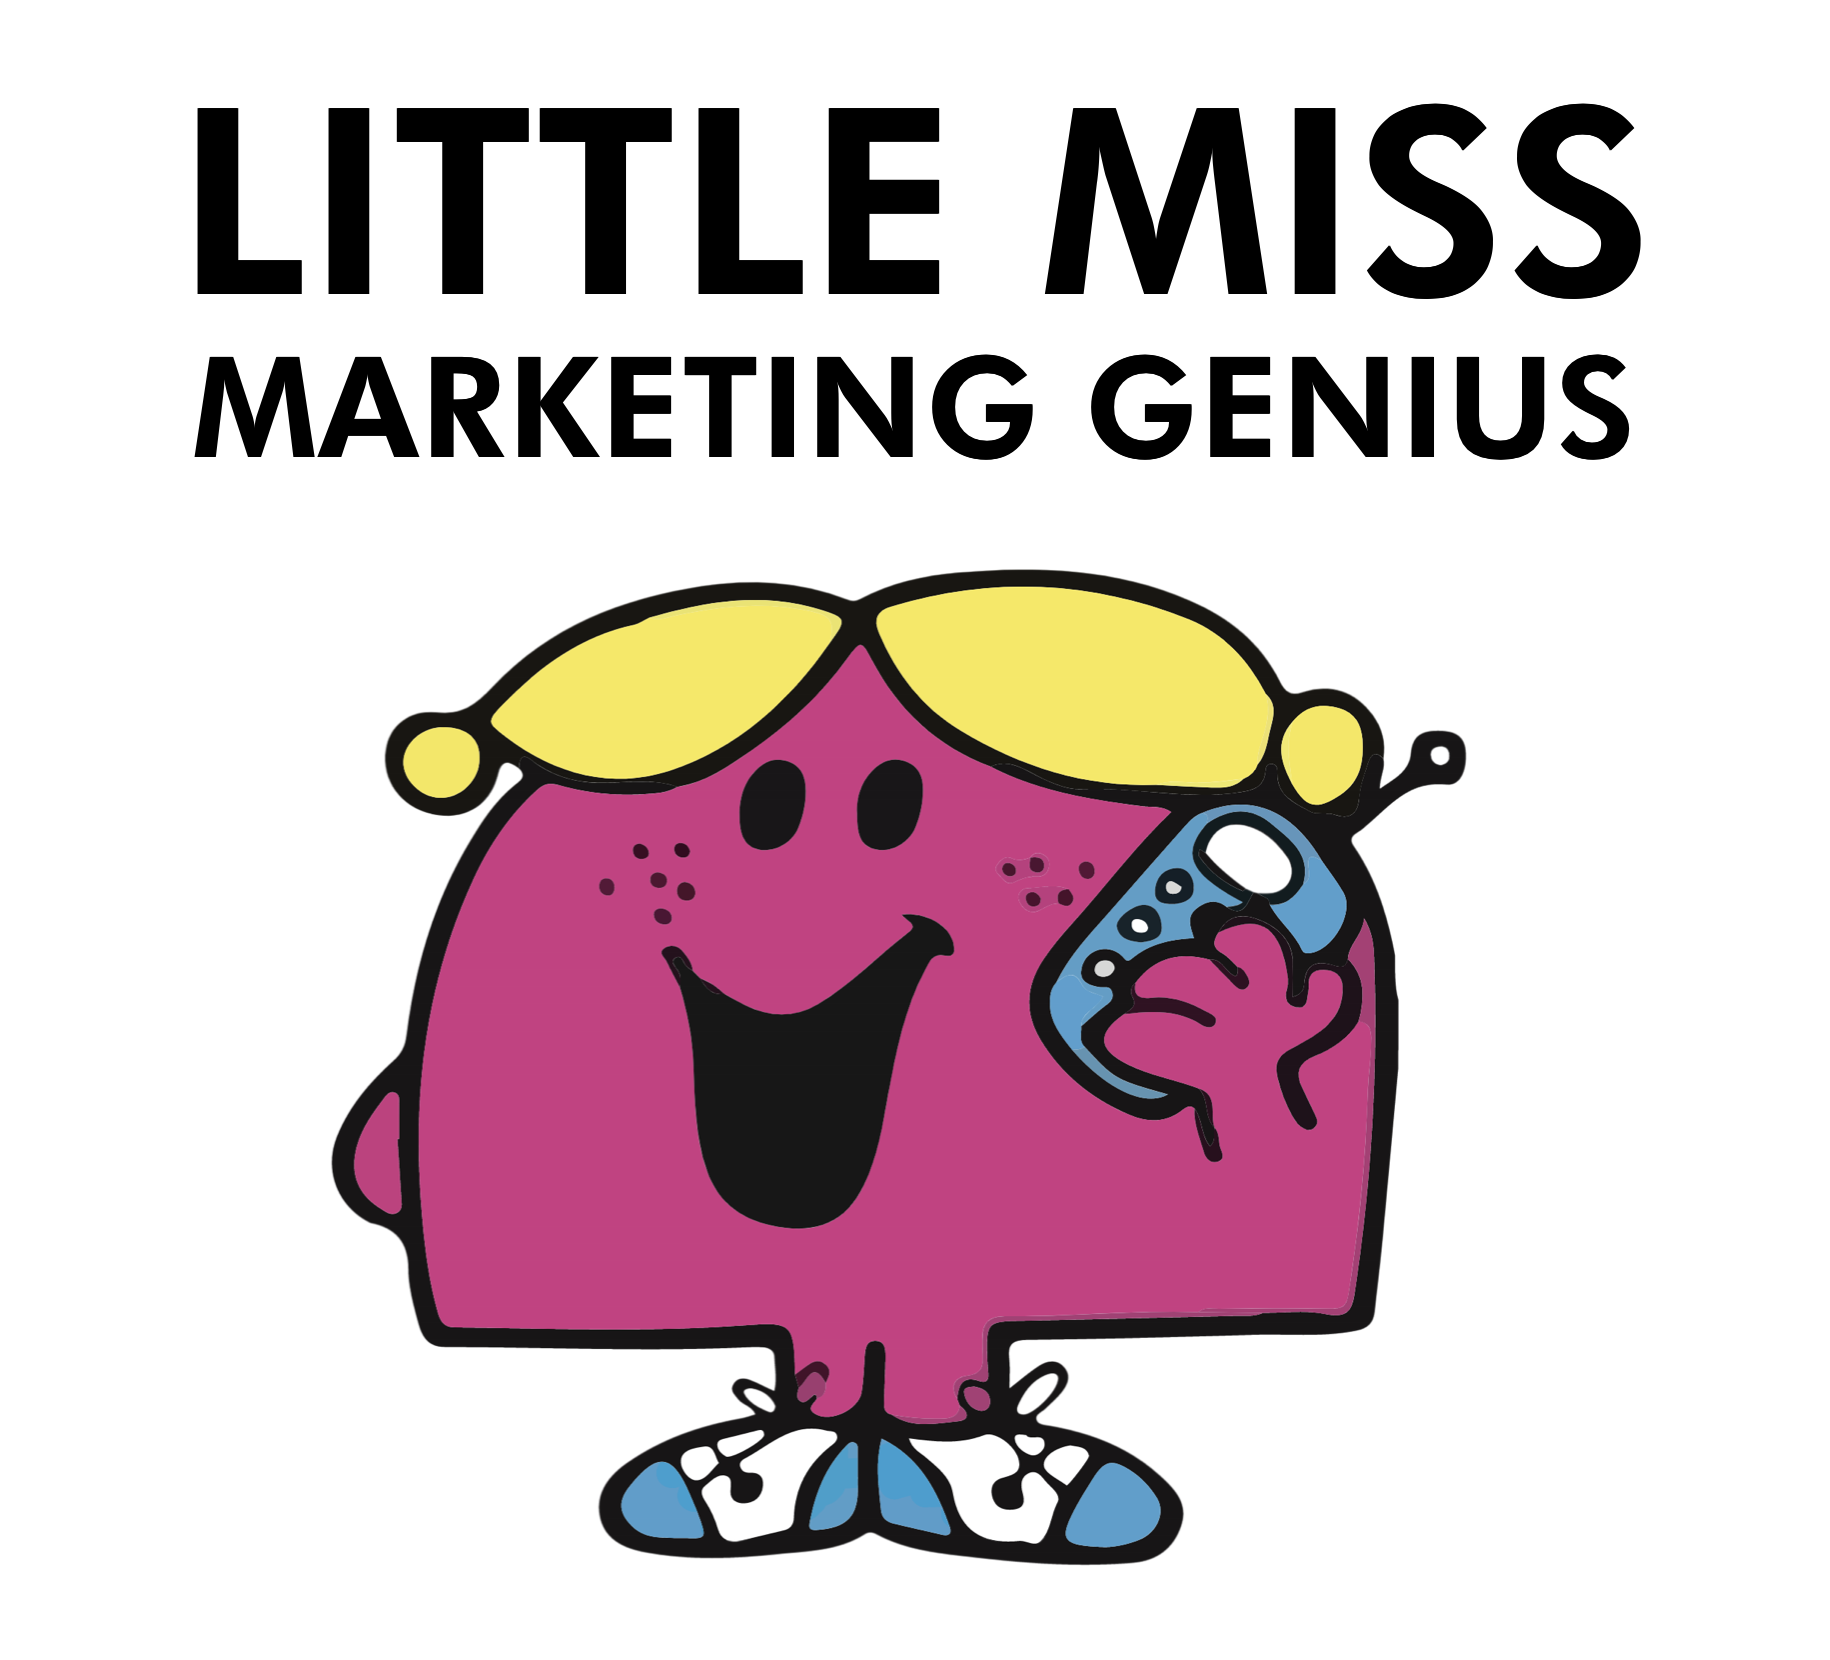 Little Miss Marketing Genius meme